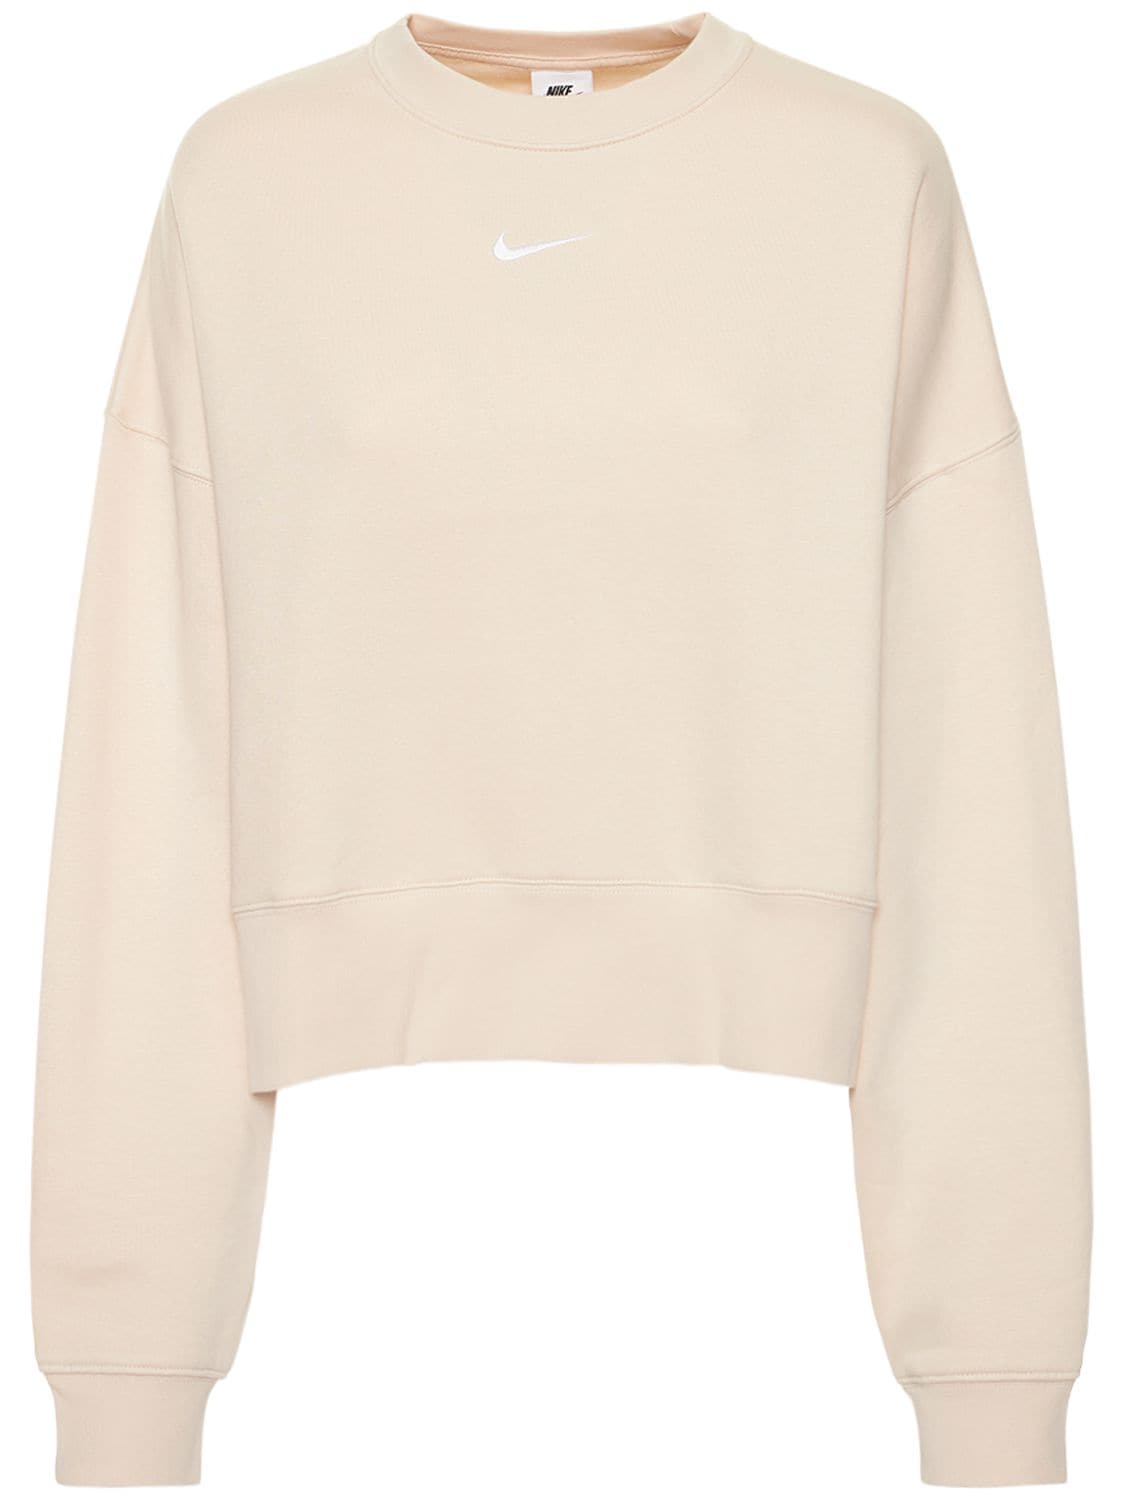 Nike Oversized Cotton Blend Sweatshirt